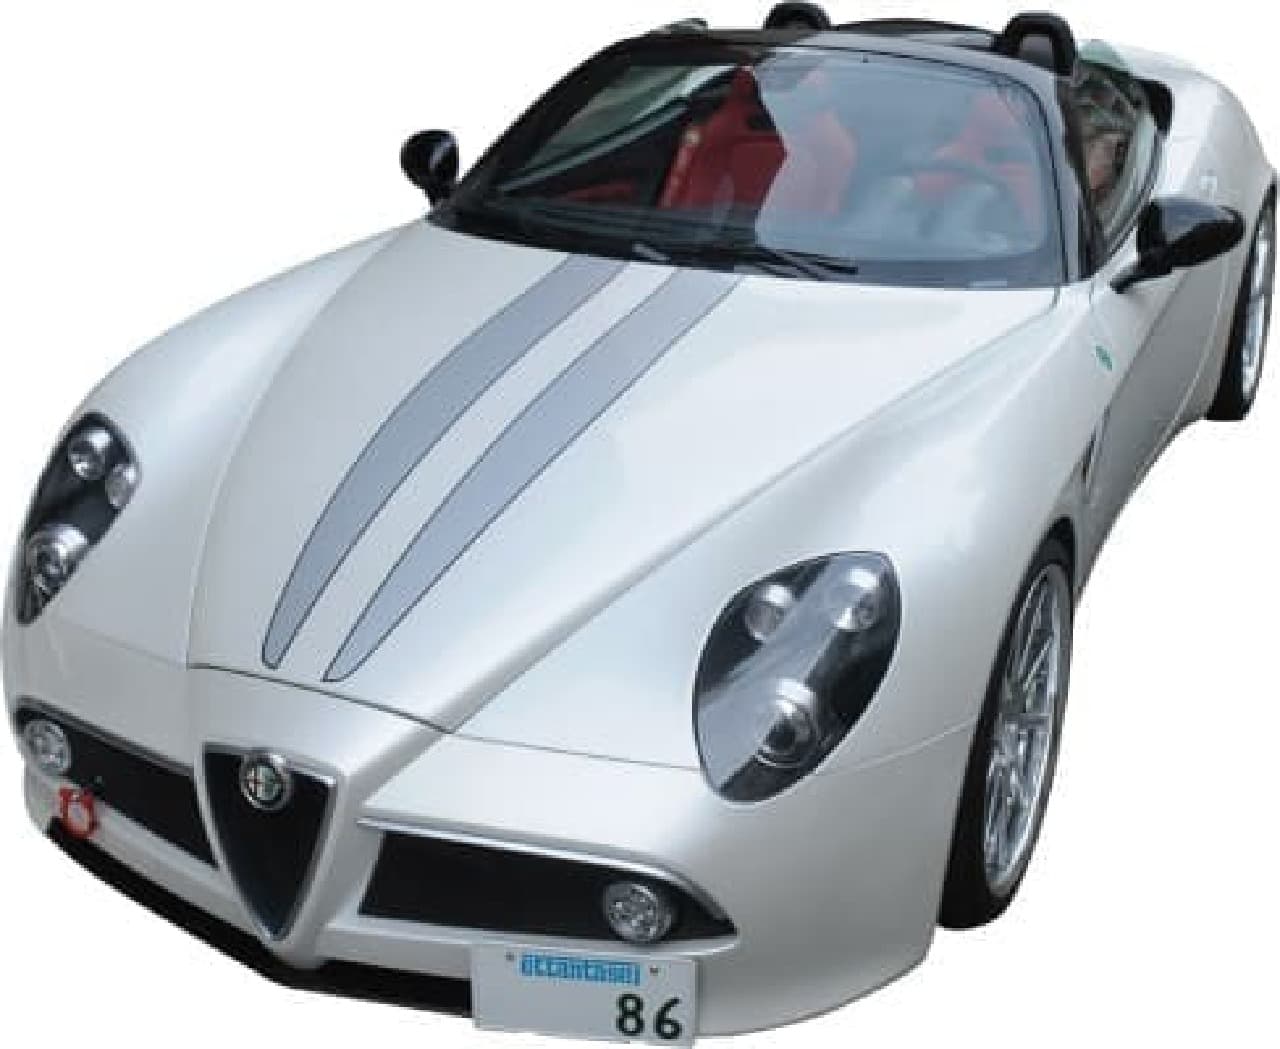 Alfa Romeo to be exhibited